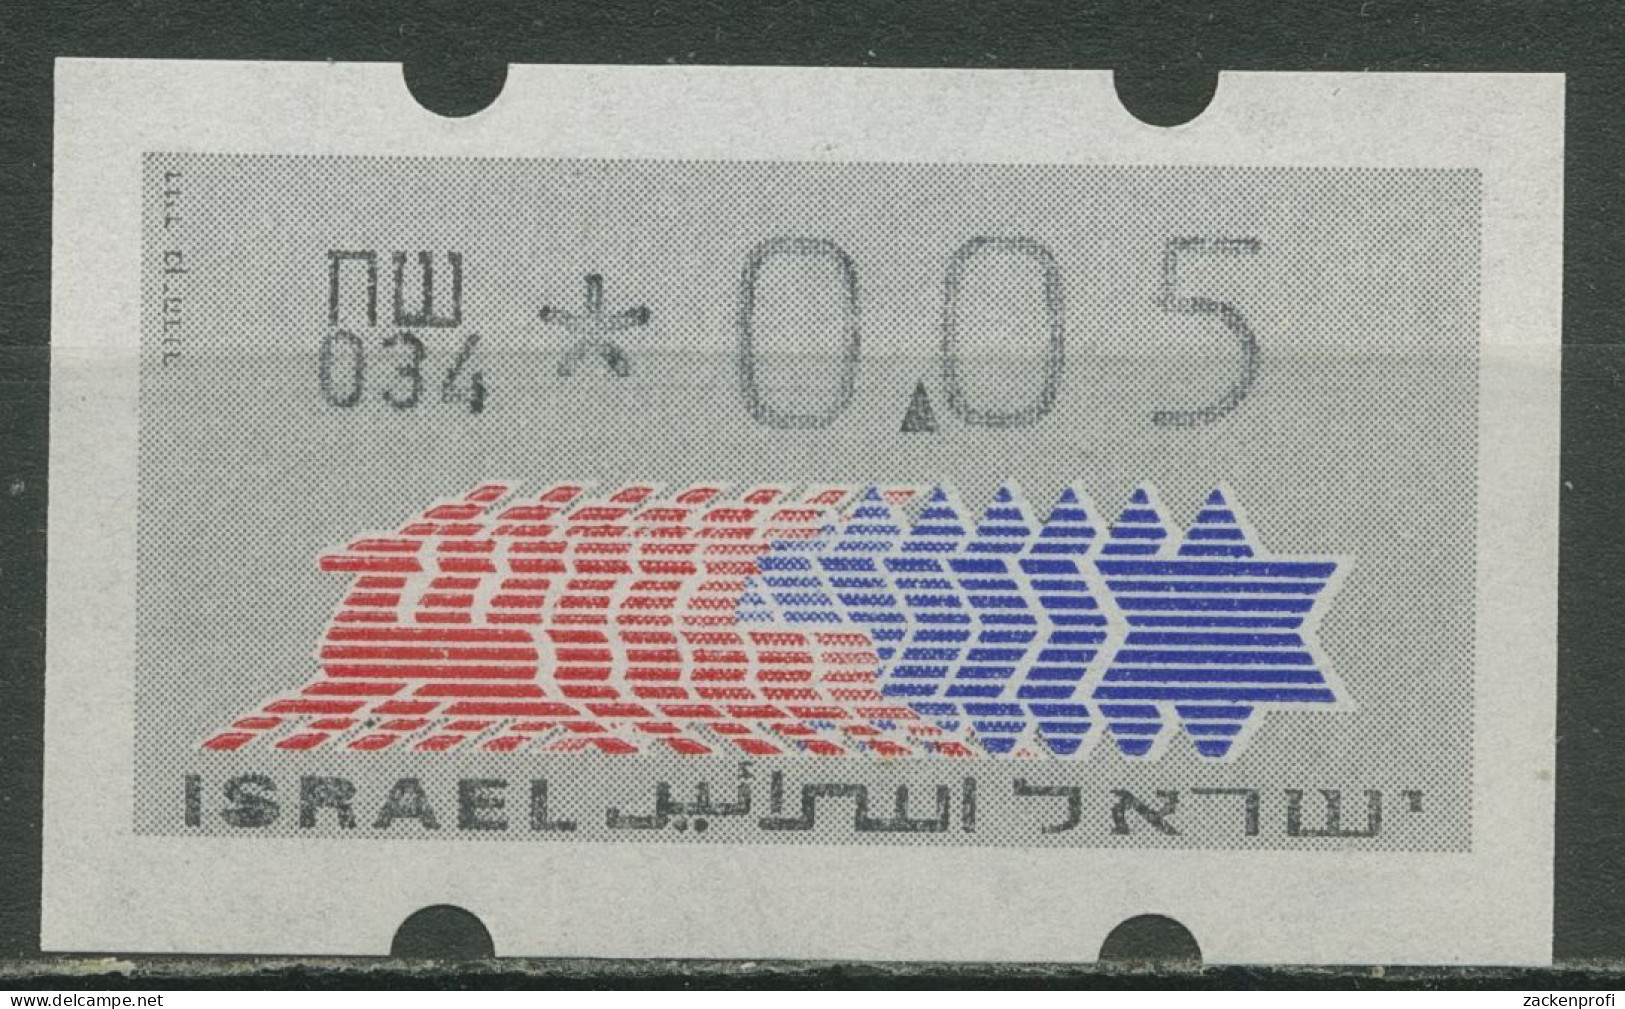 Israel ATM 1990 Hirsch Automat 034 Einzelwert ATM 3.4.34 Postfrisch - Automatenmarken (Frama)